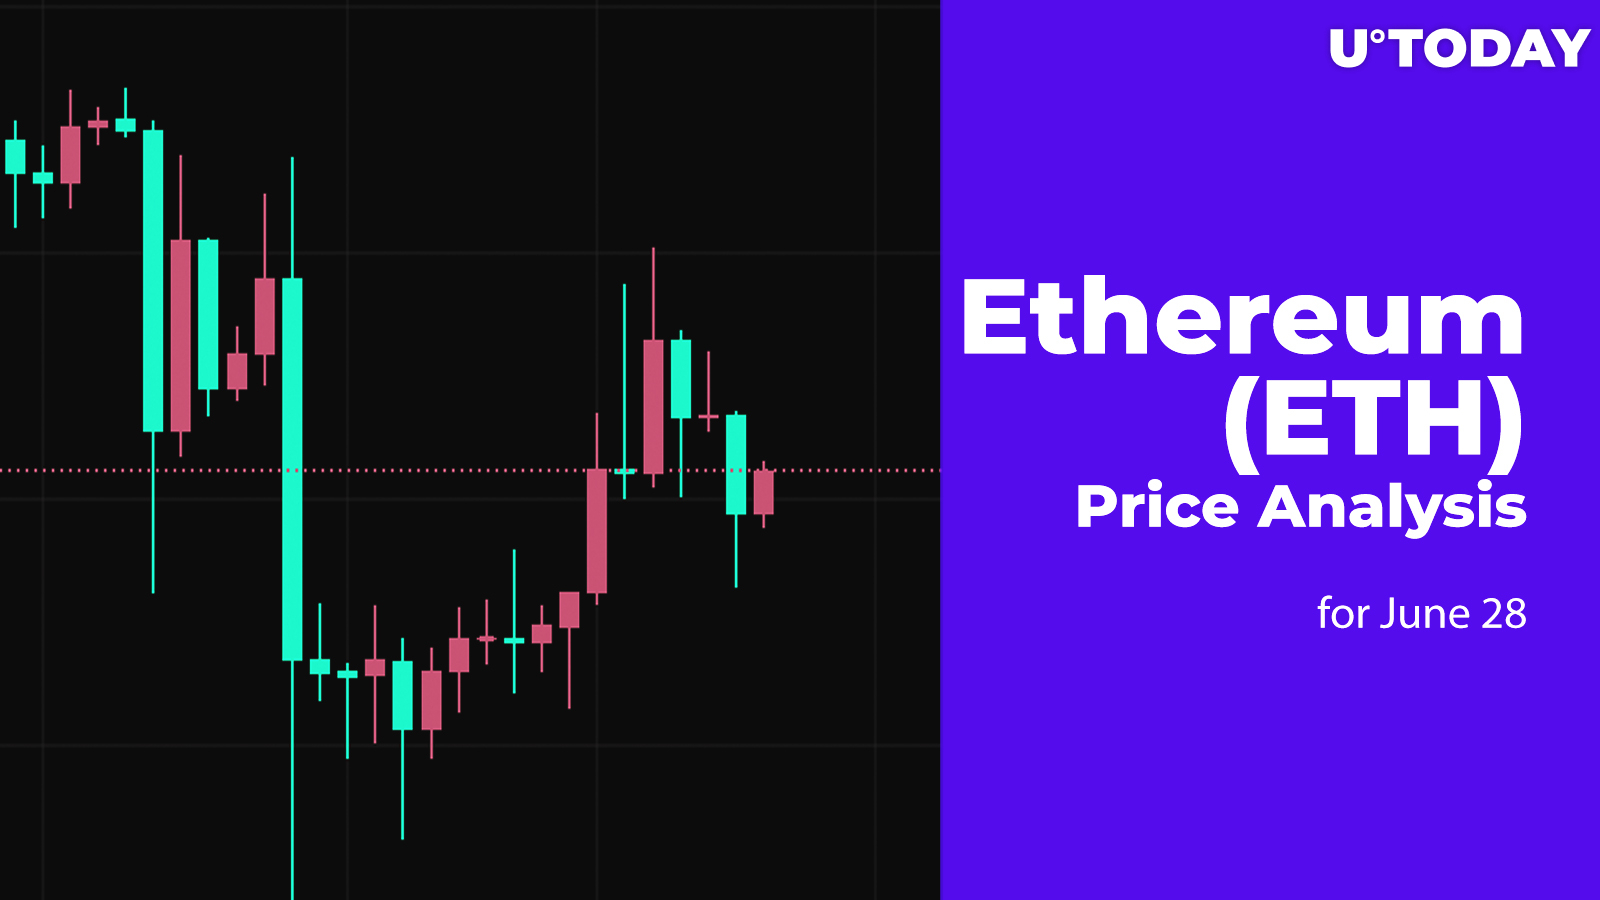 Ethereum (ETH) Price Analysis for June 28